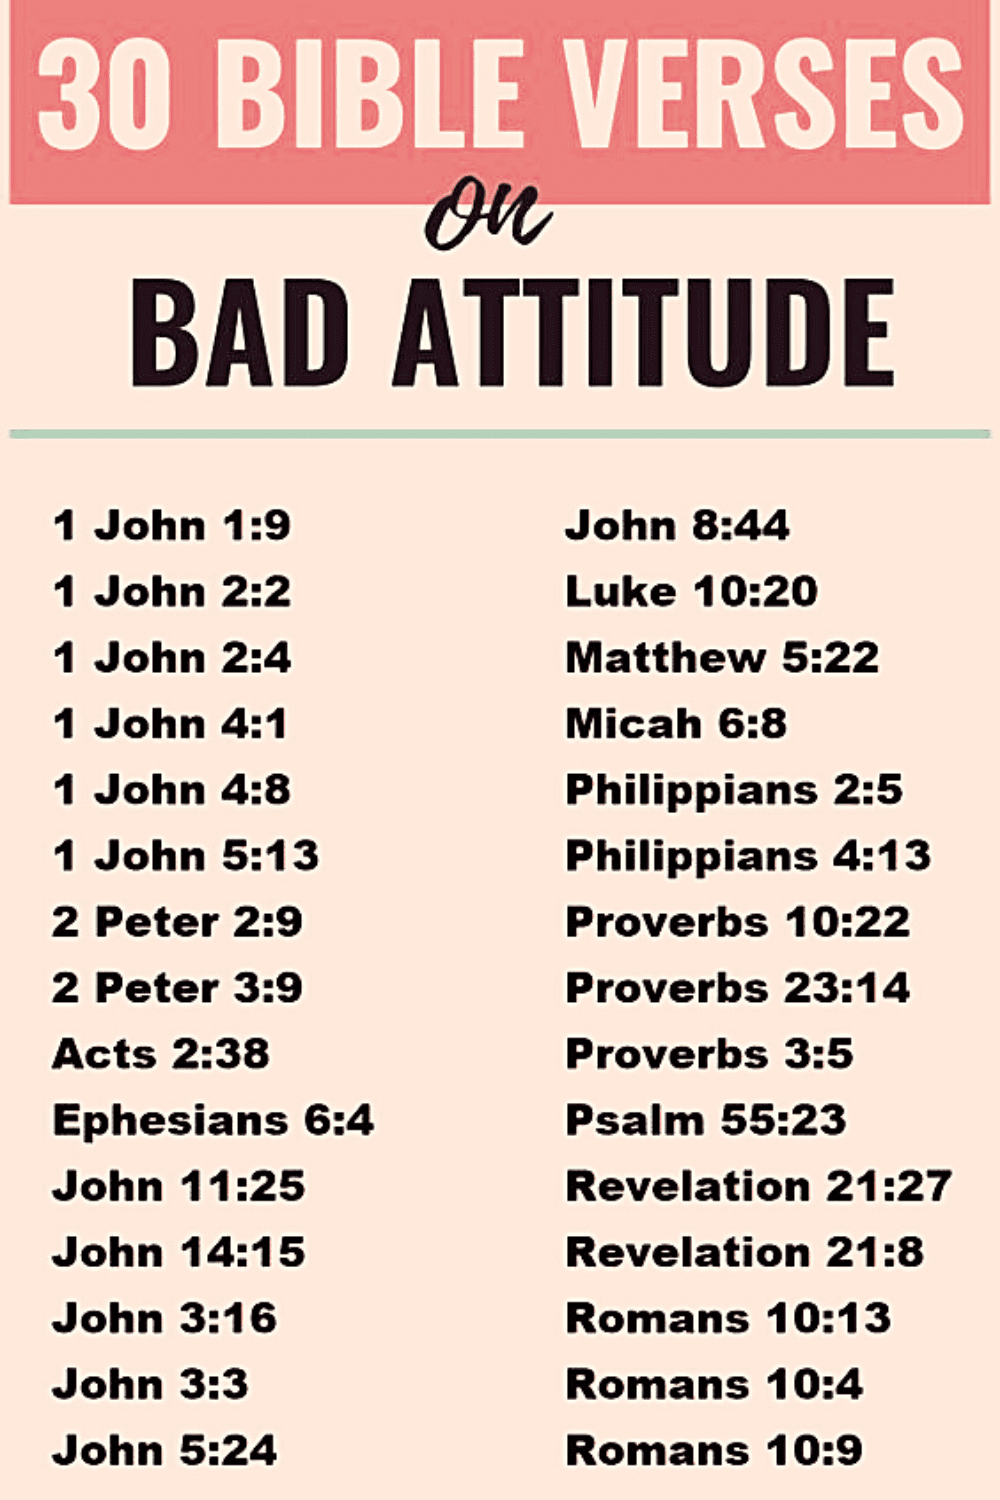 30 bible verses on bad attitude HD Wallpaper